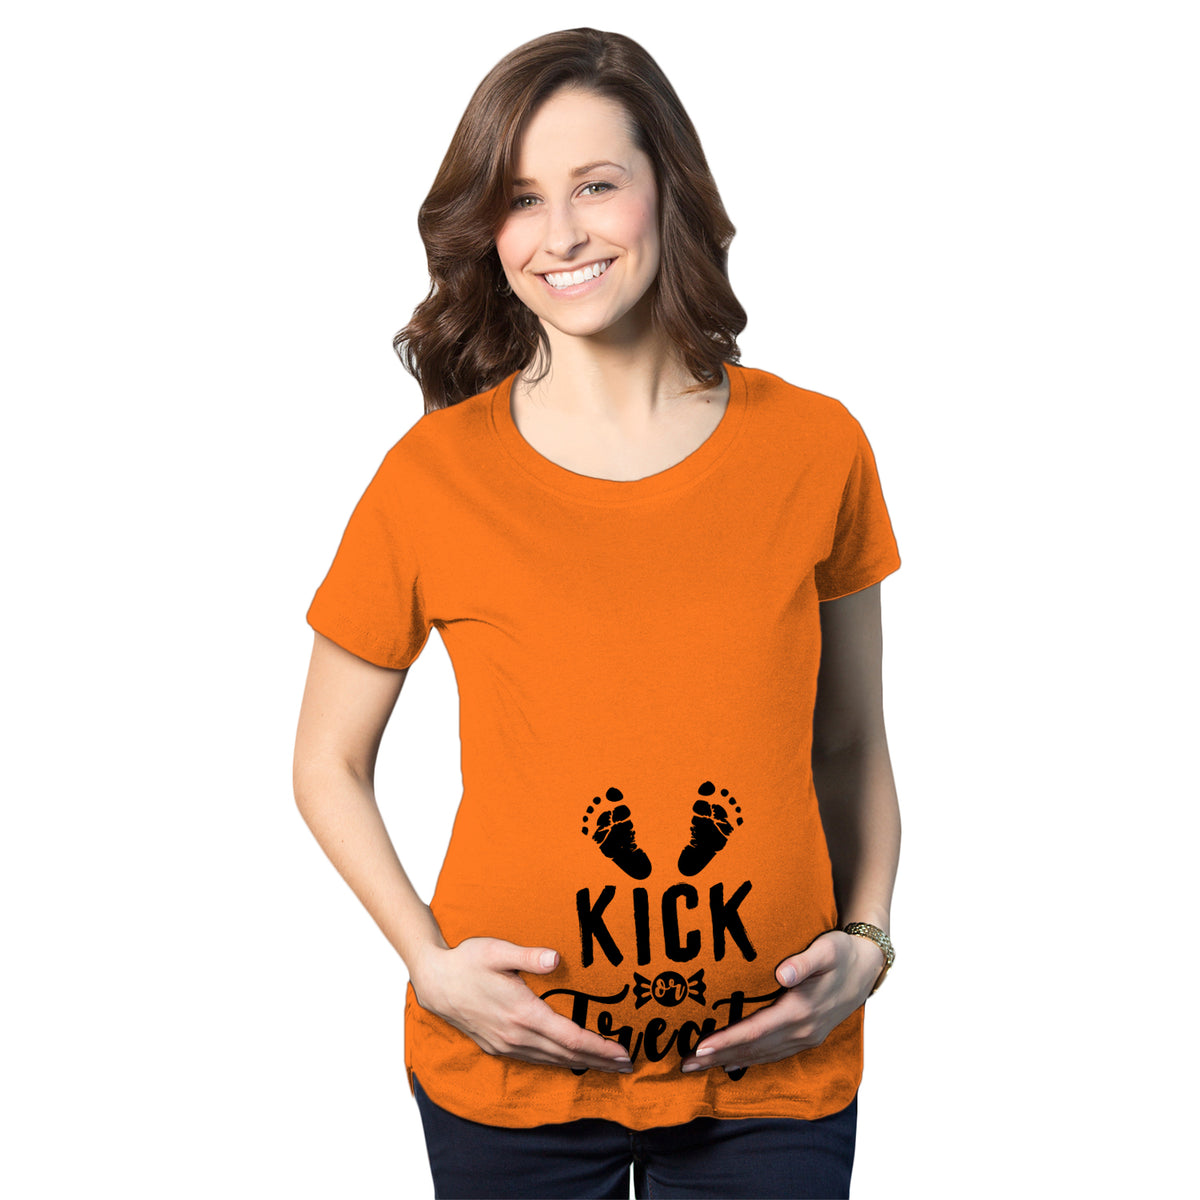 Funny Orange Kick or Treat Maternity T Shirt Nerdy Halloween Tee